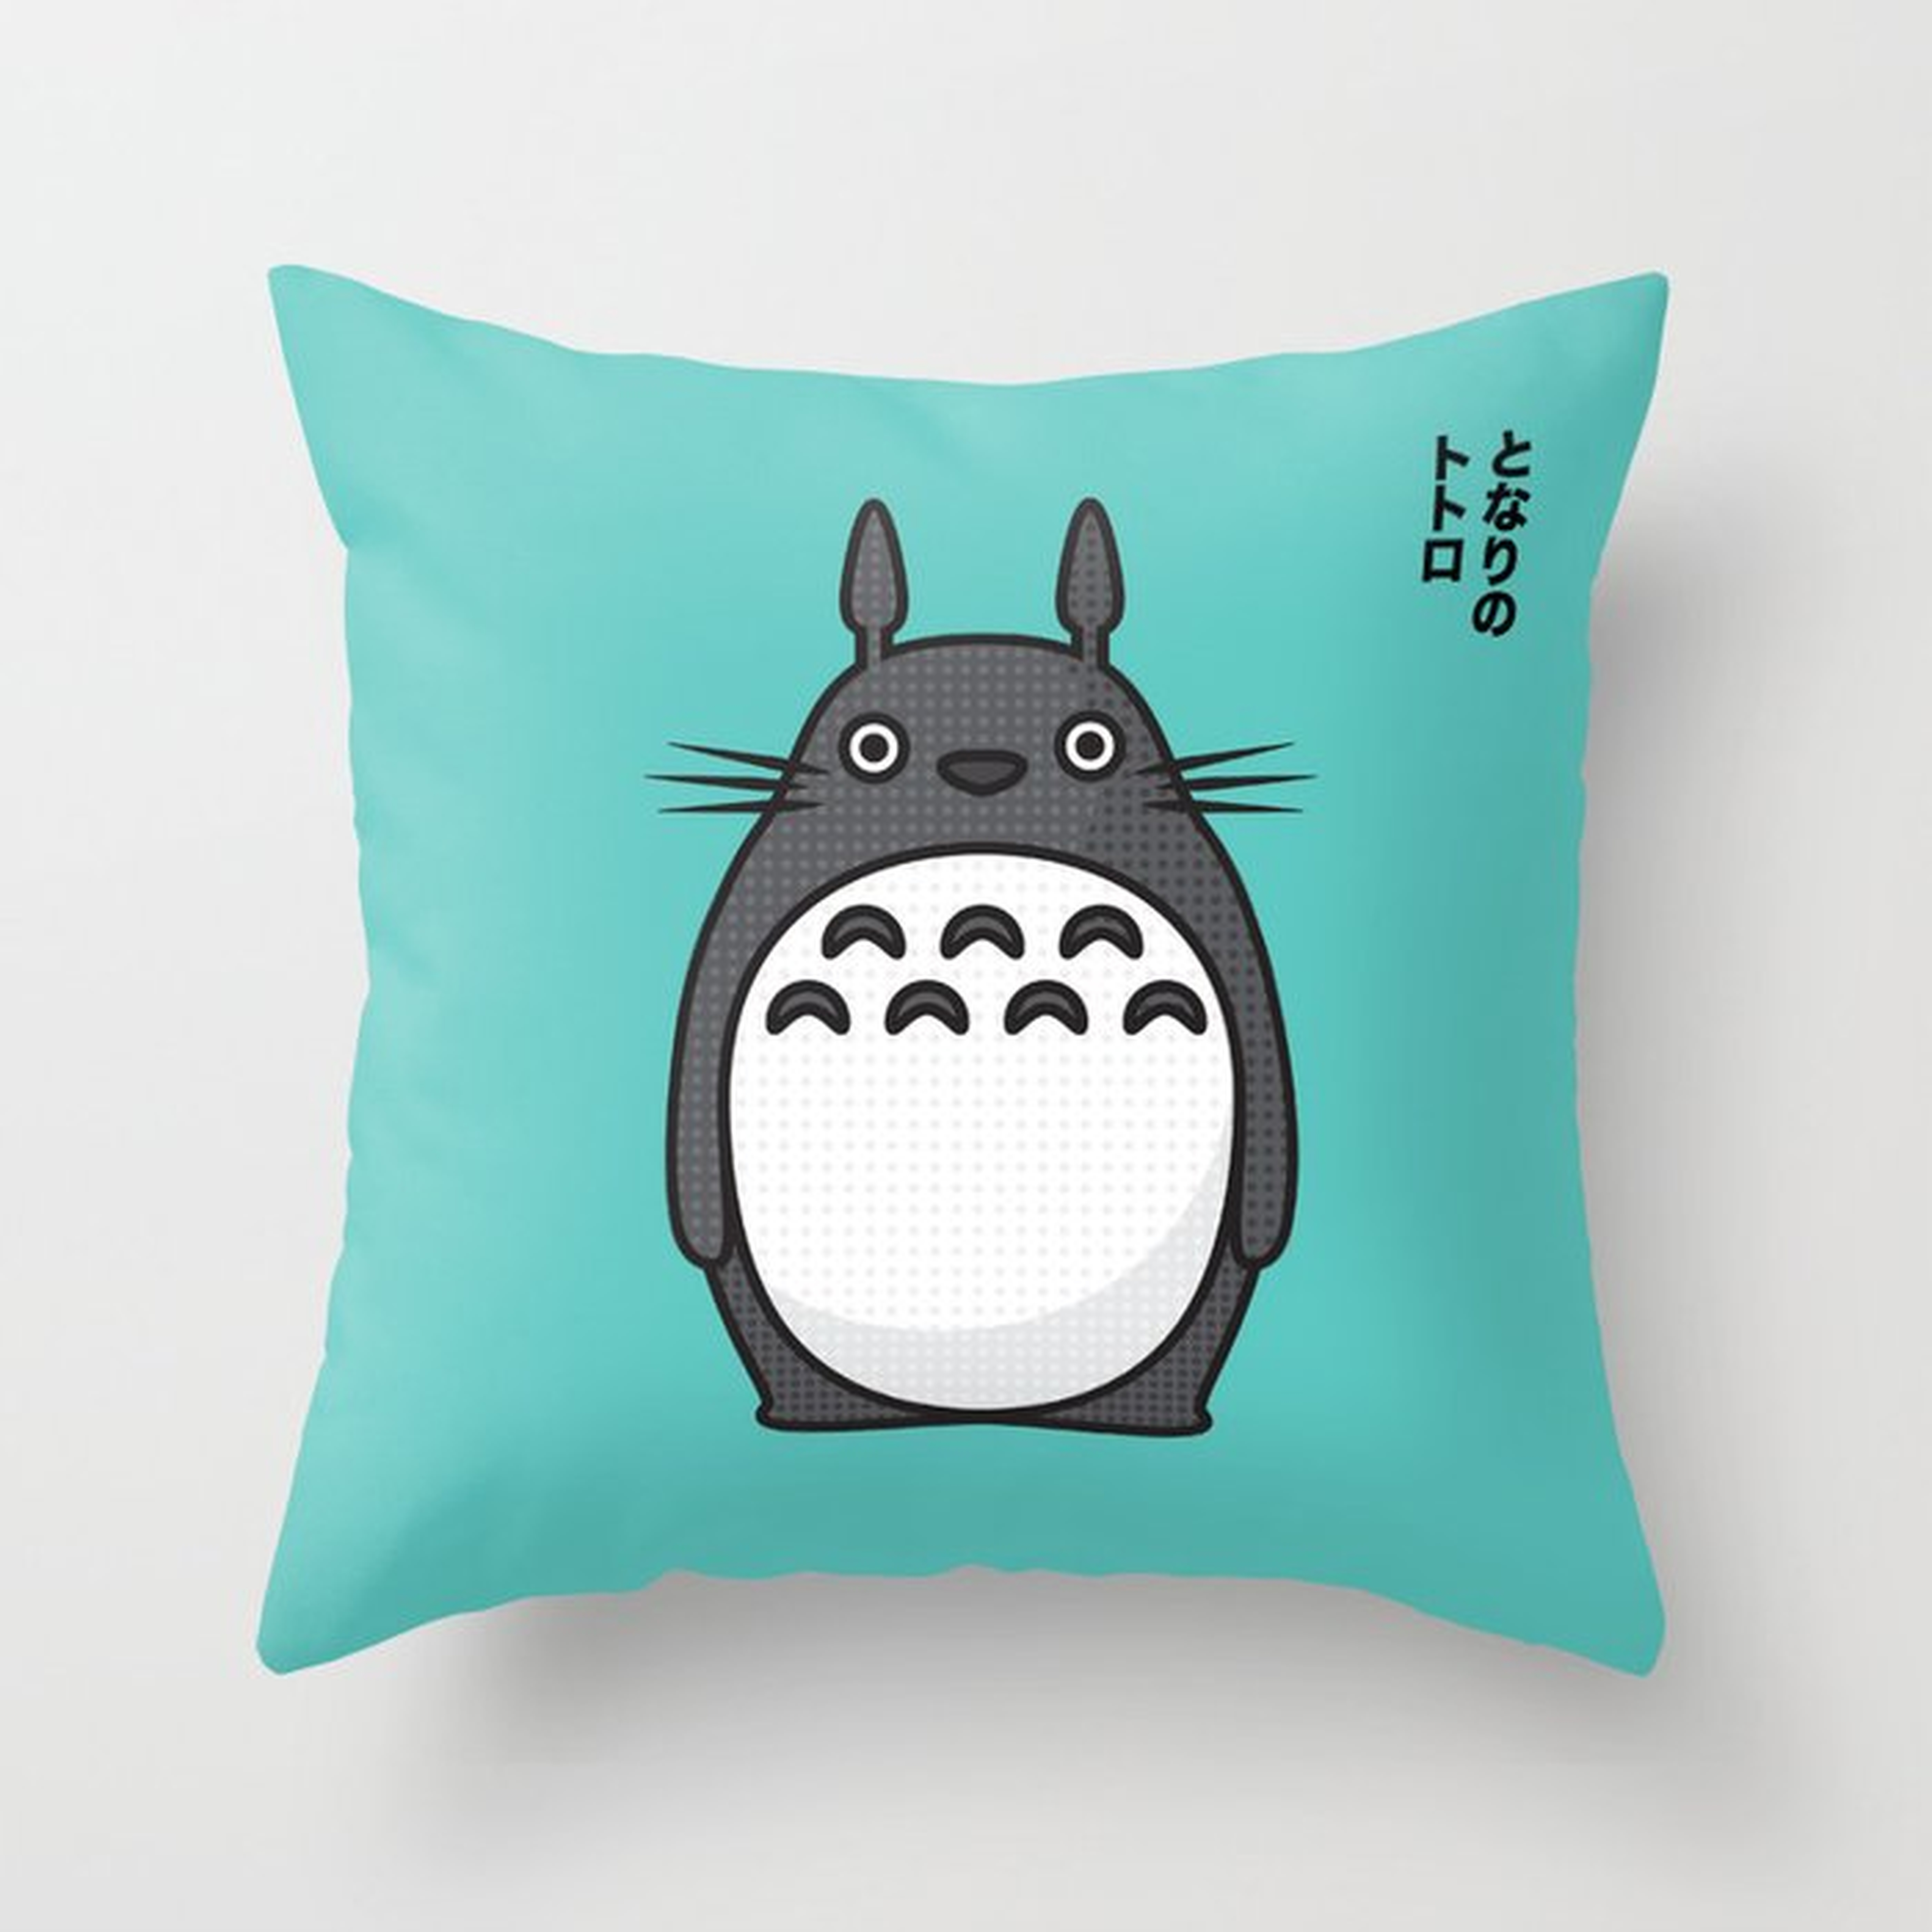 Totoro Pop Art - Blue Version Throw Pillow 16x16 w/ insert - Society6